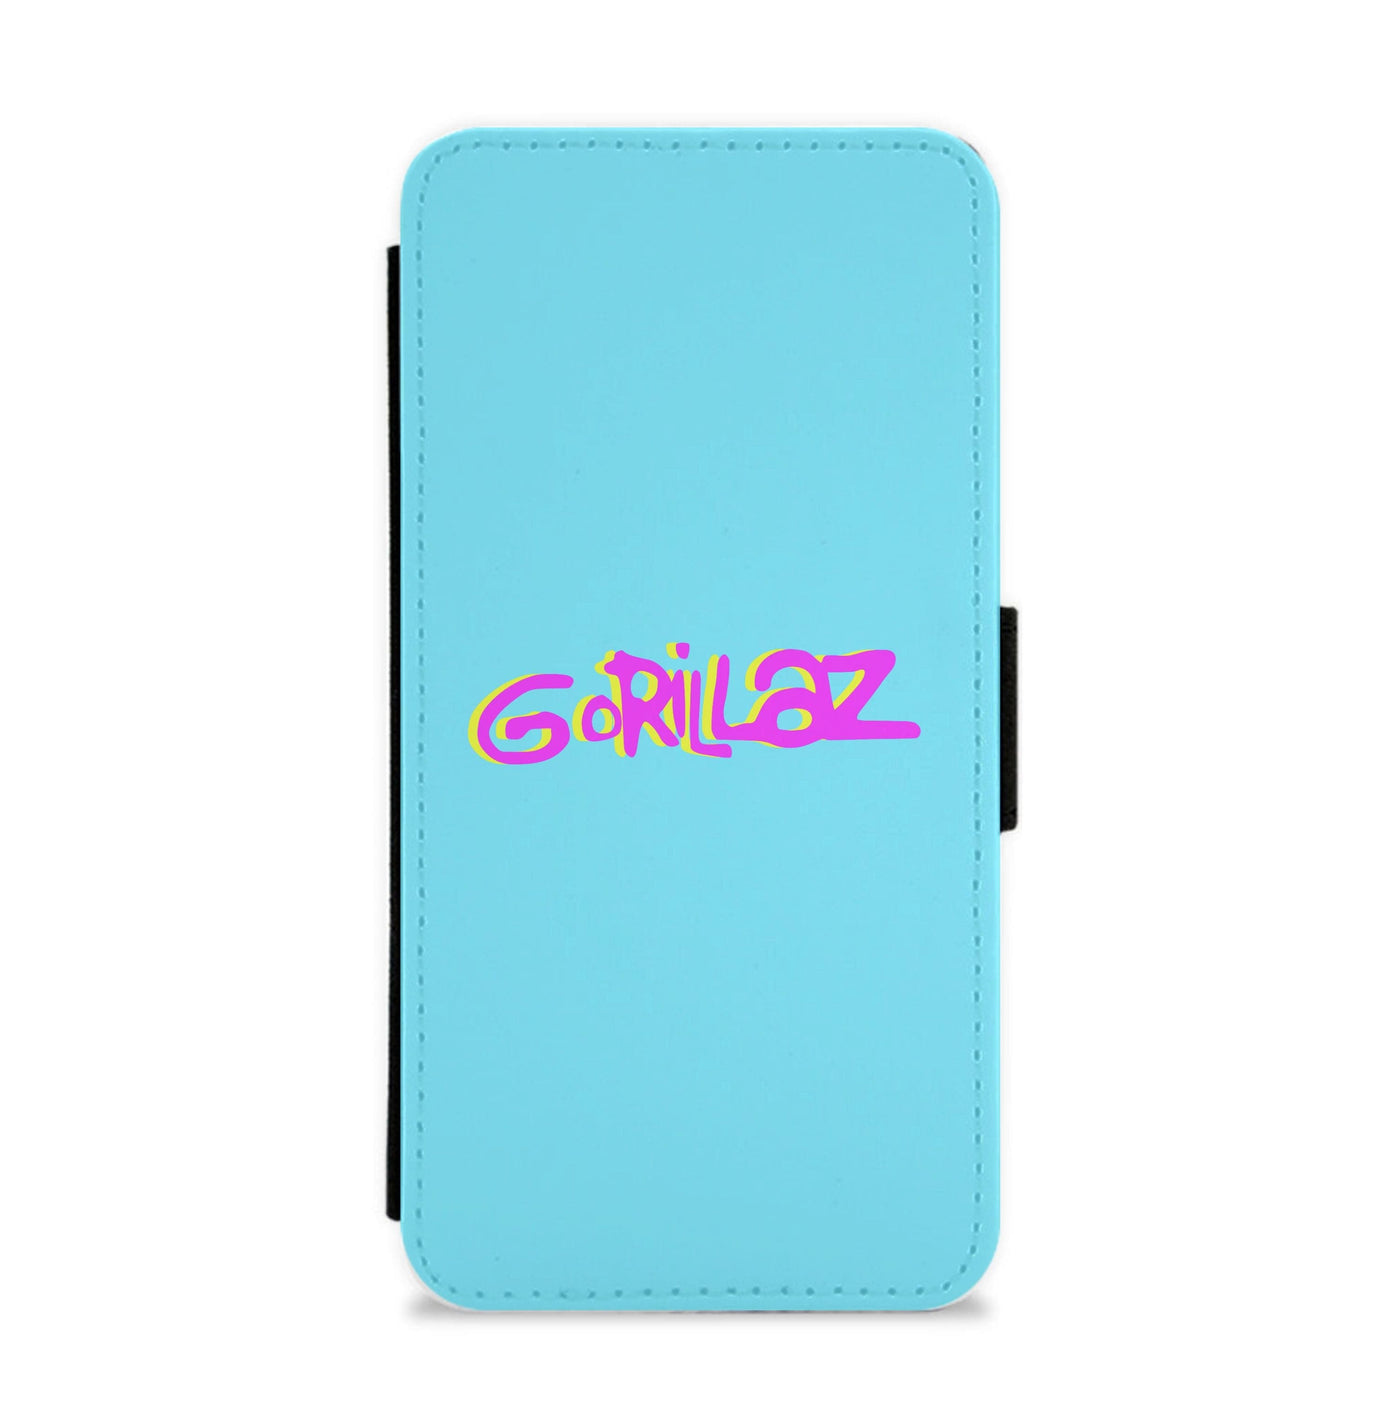 Title - Gorillaz Flip / Wallet Phone Case